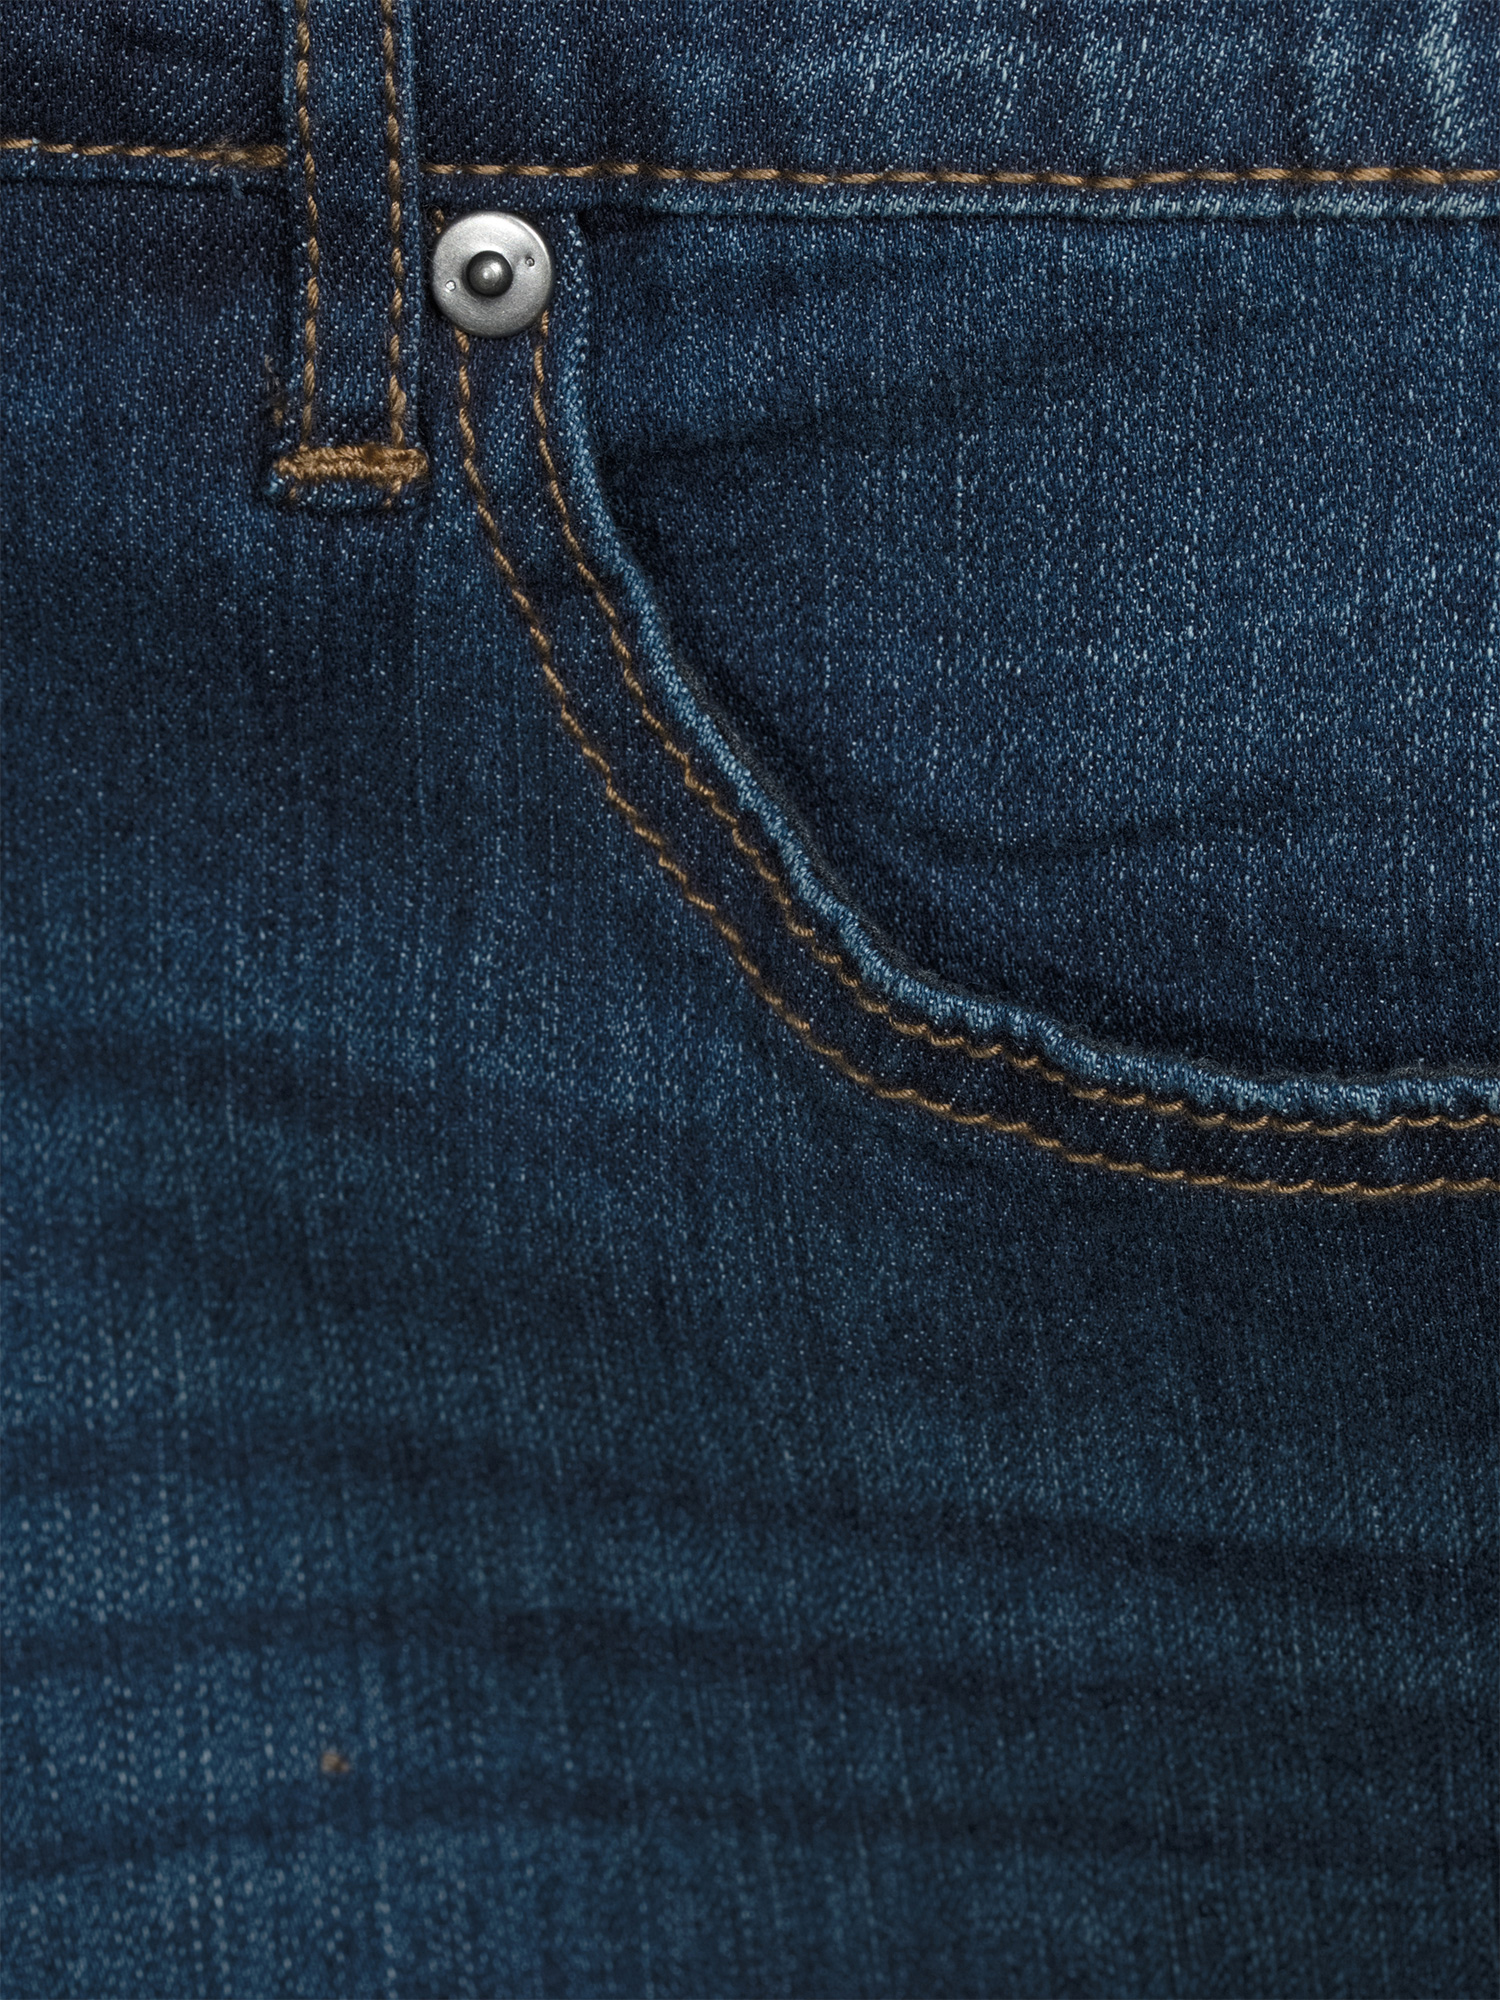 Terra & Sky Women's Plus Size Bootcut Jeans - image 3 of 6